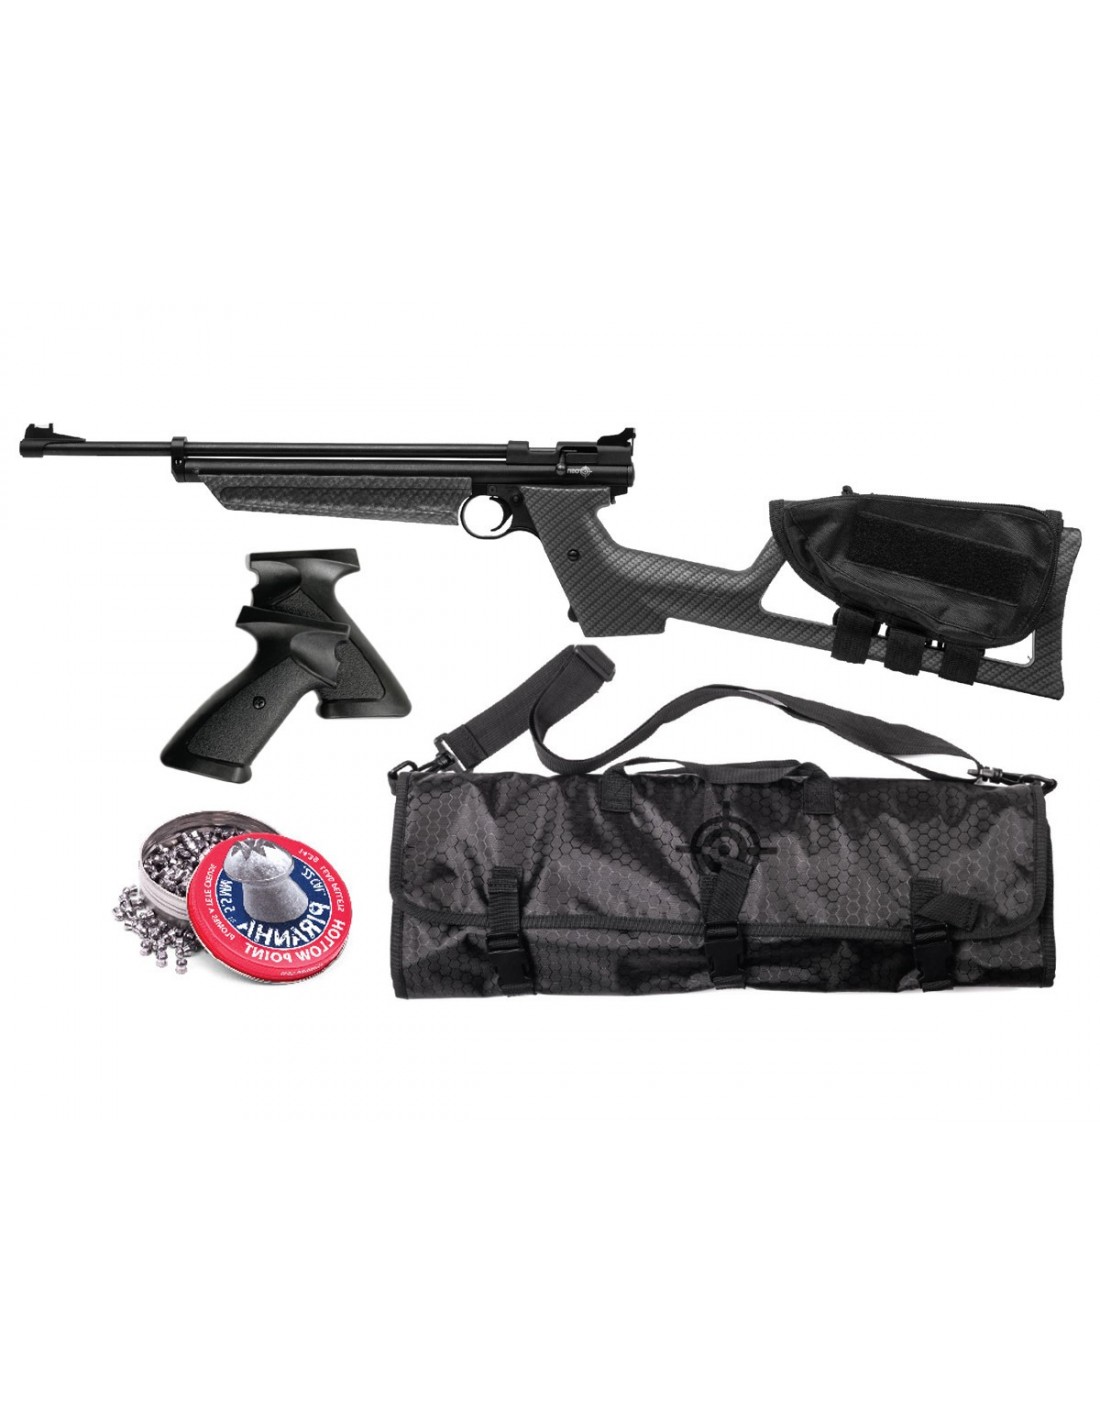 Kit de Pistola y Rifle Crosman Drifter Multi-Pump de Diabolos